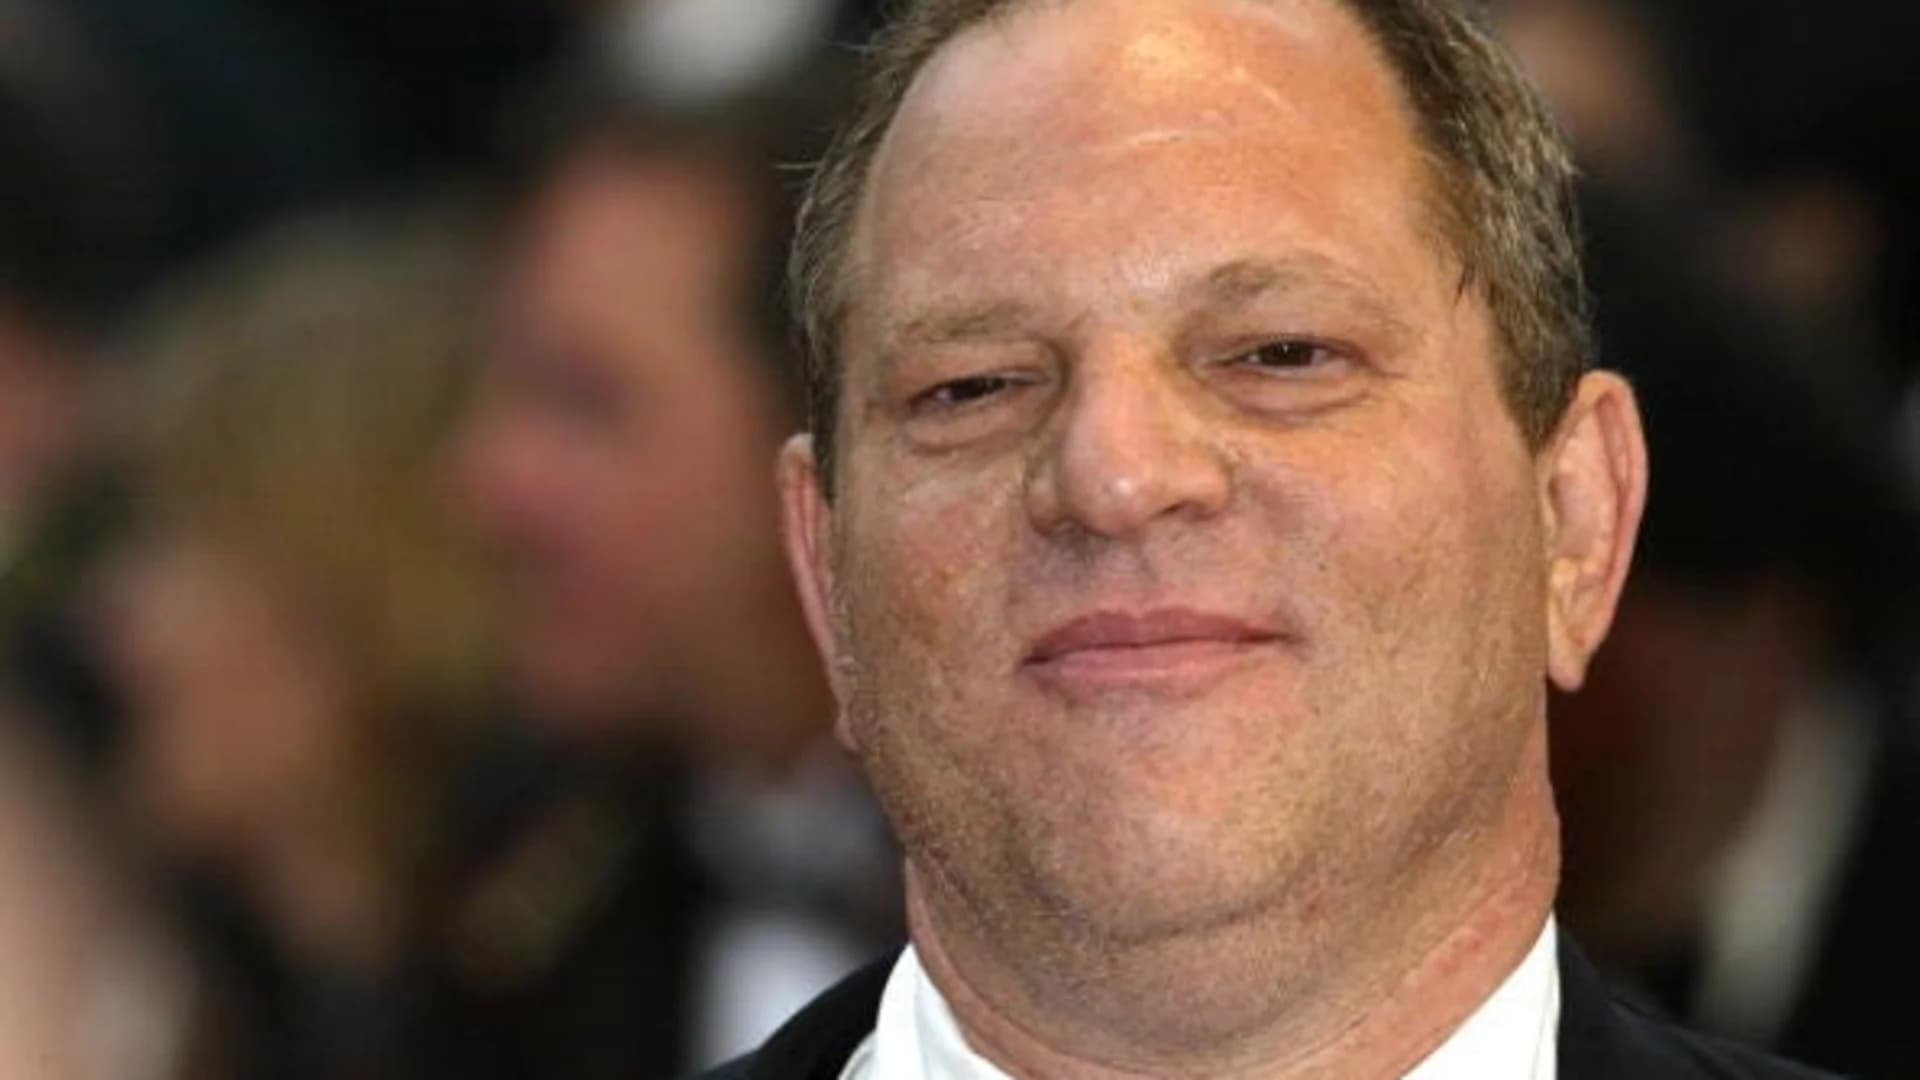 Weinstein expected to surrender in sex misconduct probe